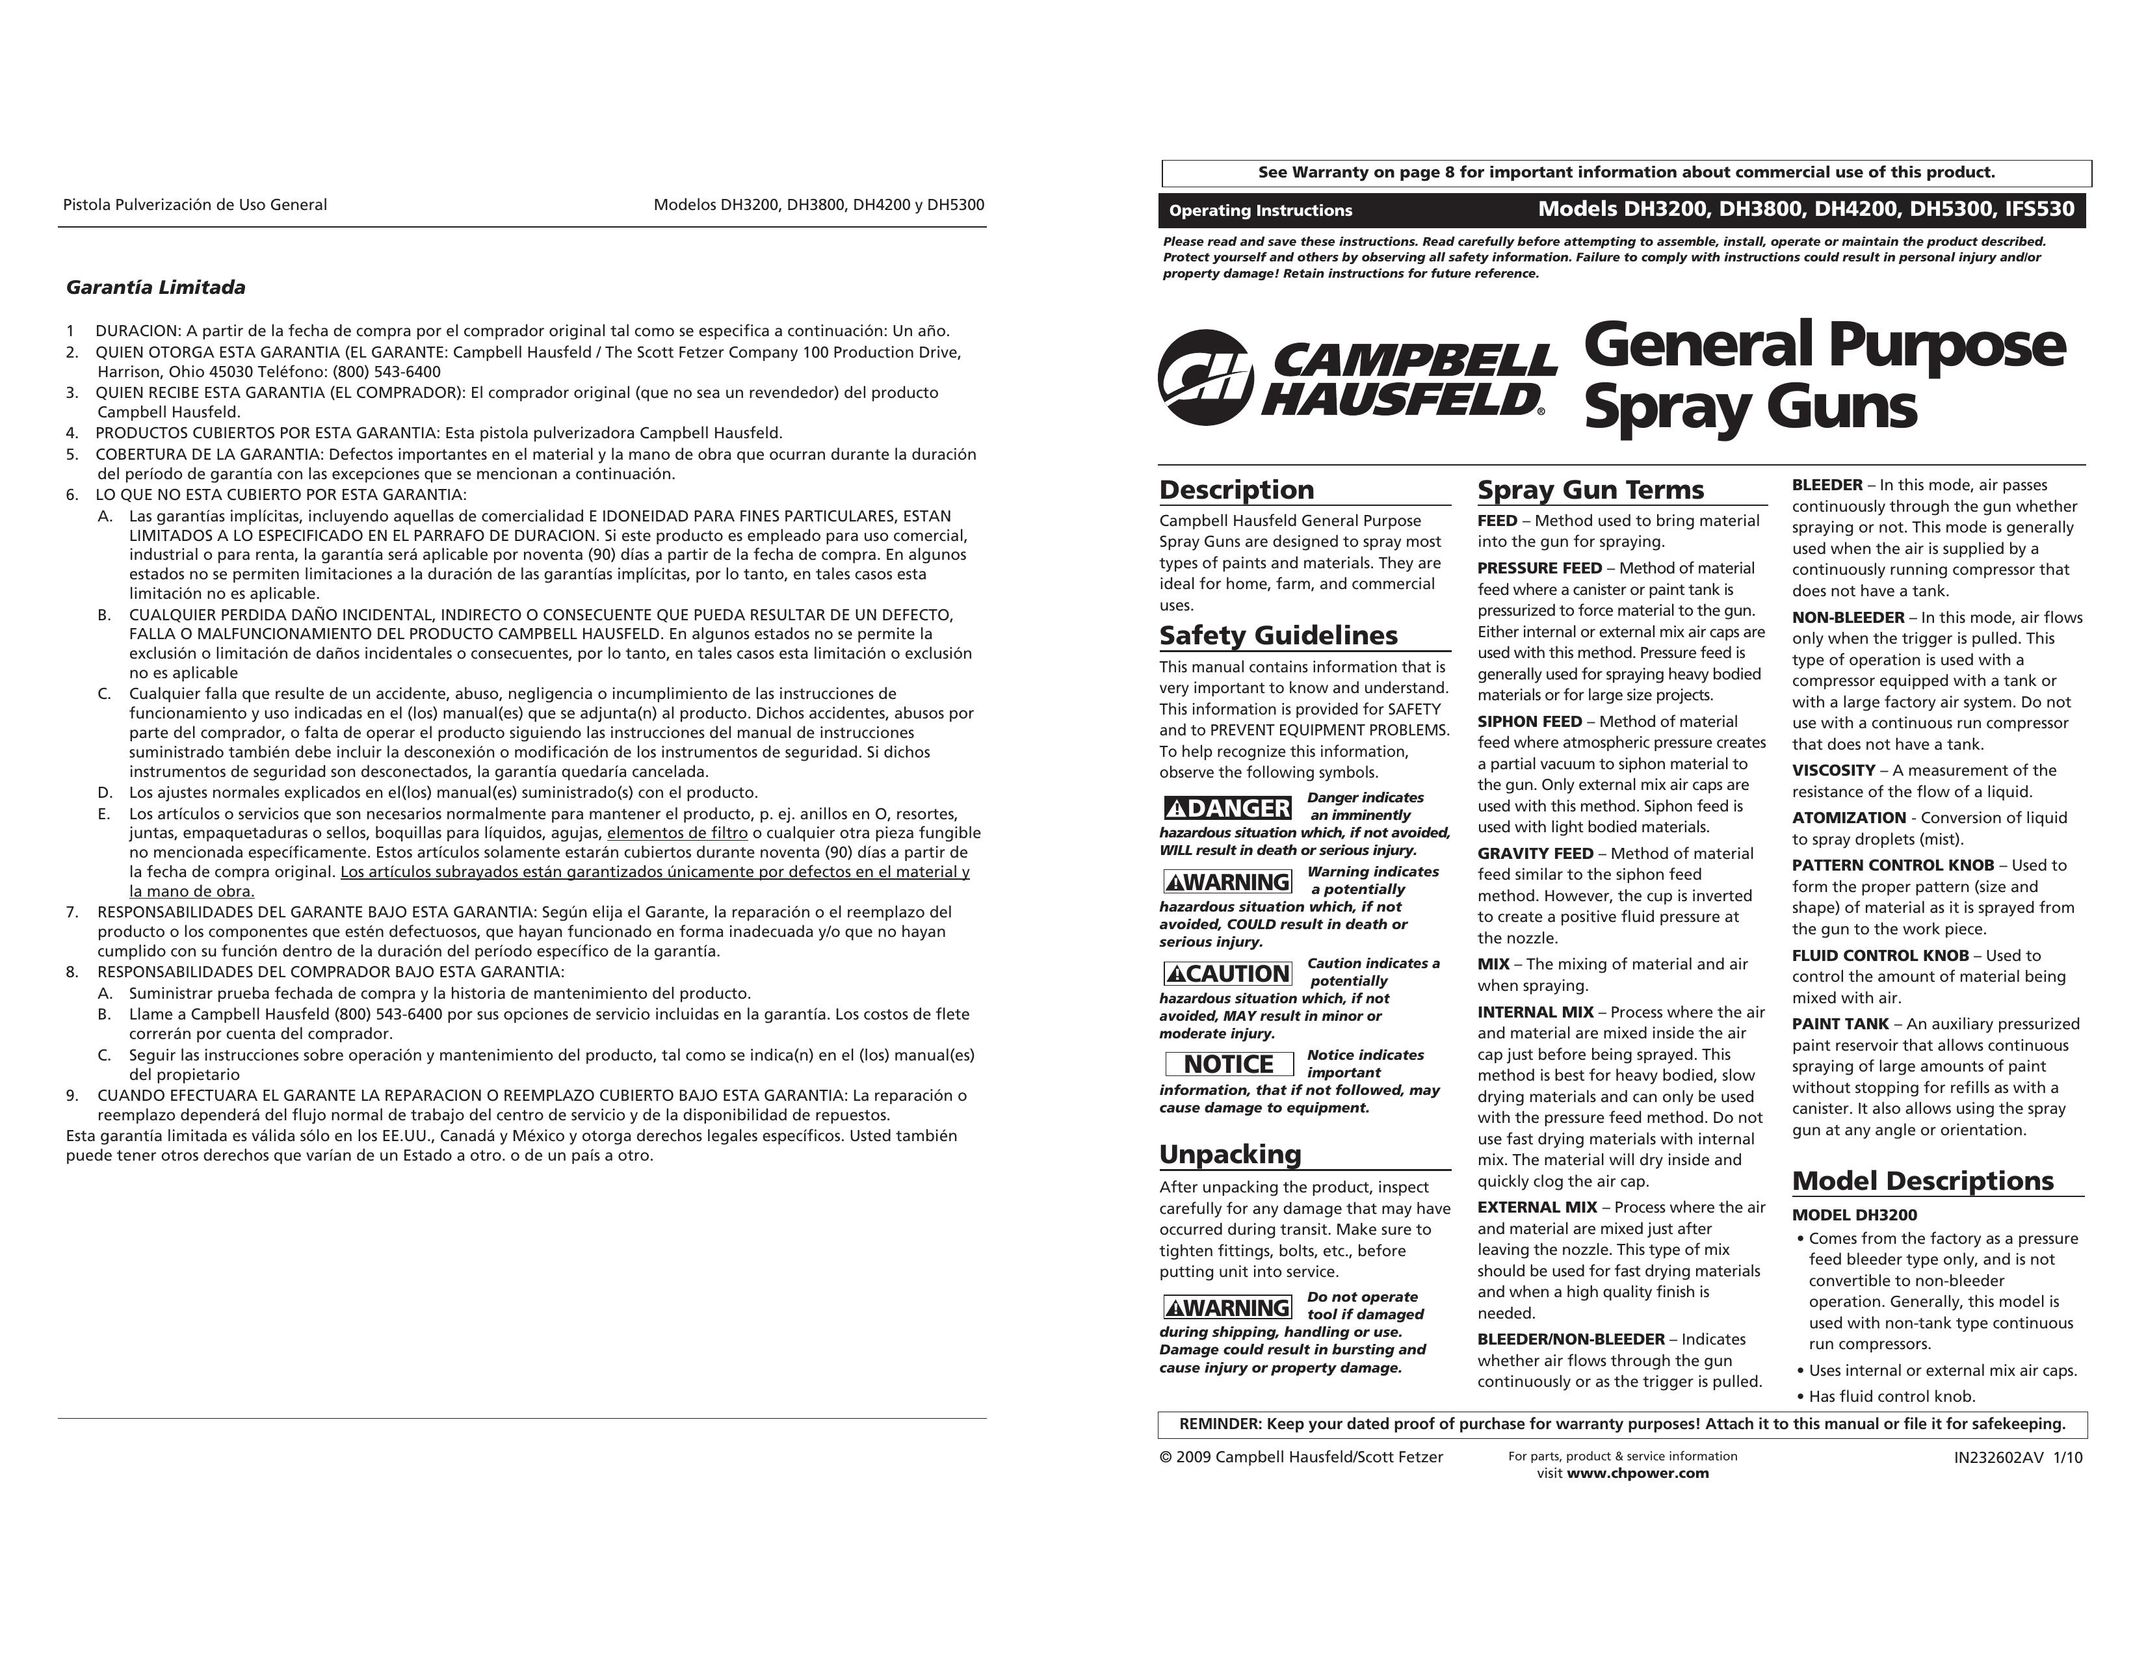 Campbell Hausfeld DH3200 Paint Sprayer User Manual